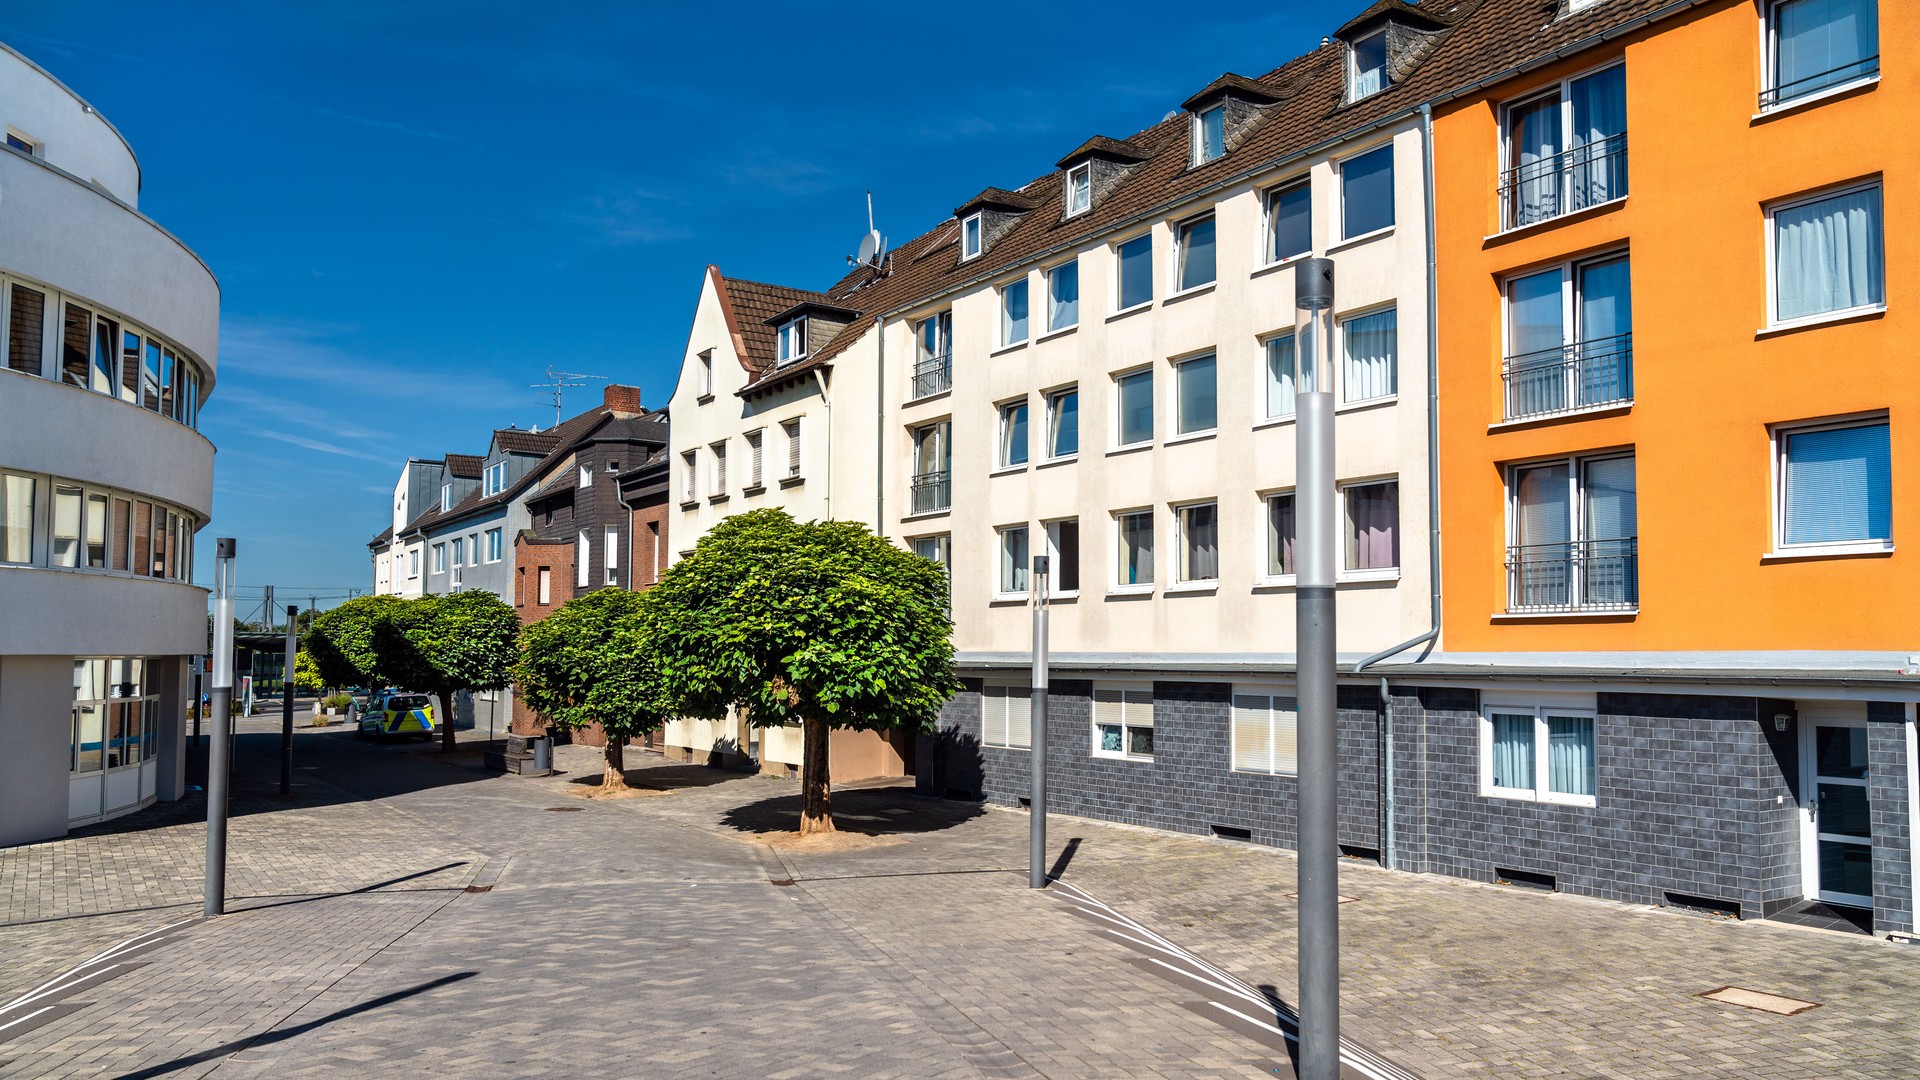 Immobilien-in-Troisdorf-VR-Immobilien.jpg
				